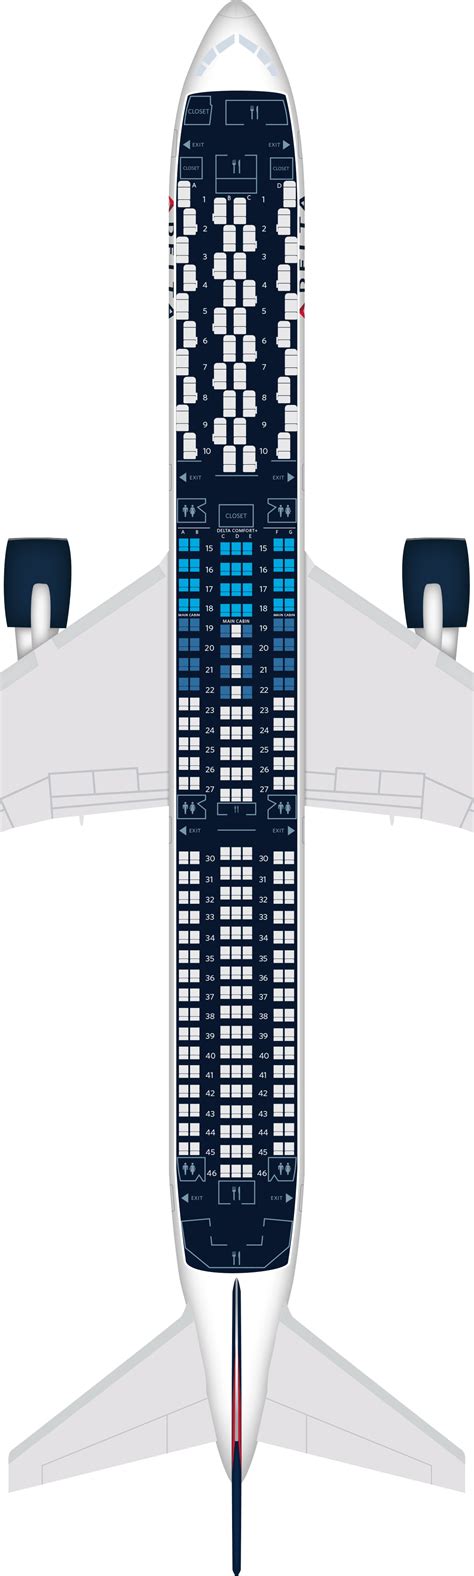 Acceso Consumirse Expresamente Boeing Seat Map Deshabilitar Que